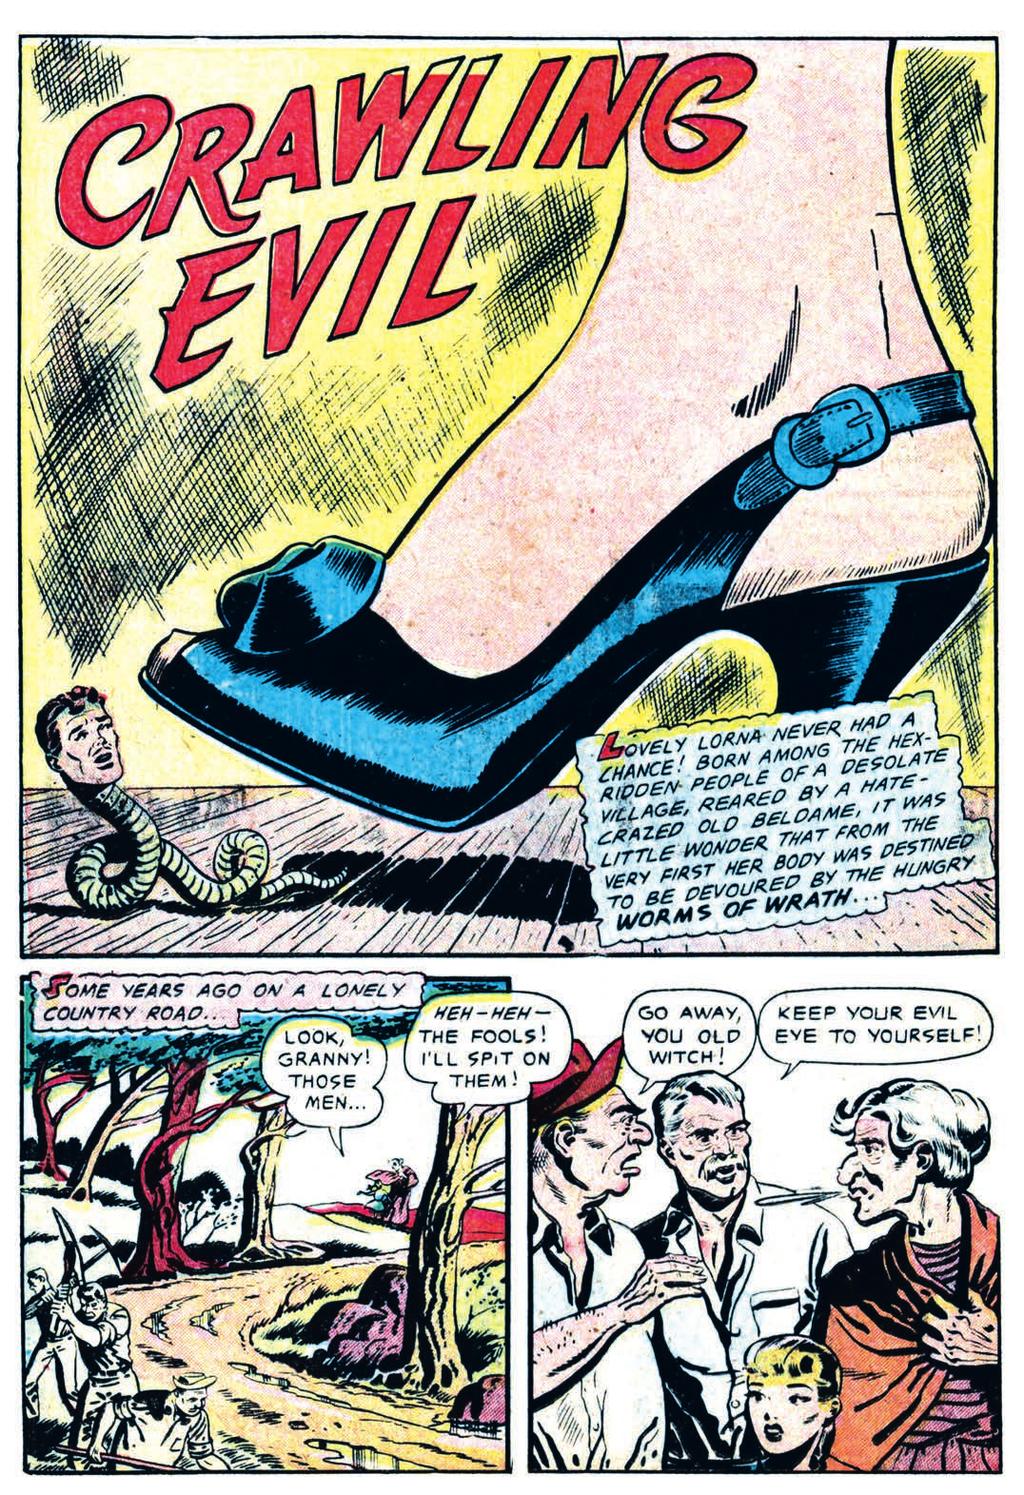 4 Journey Into Fear #10, November 1952.